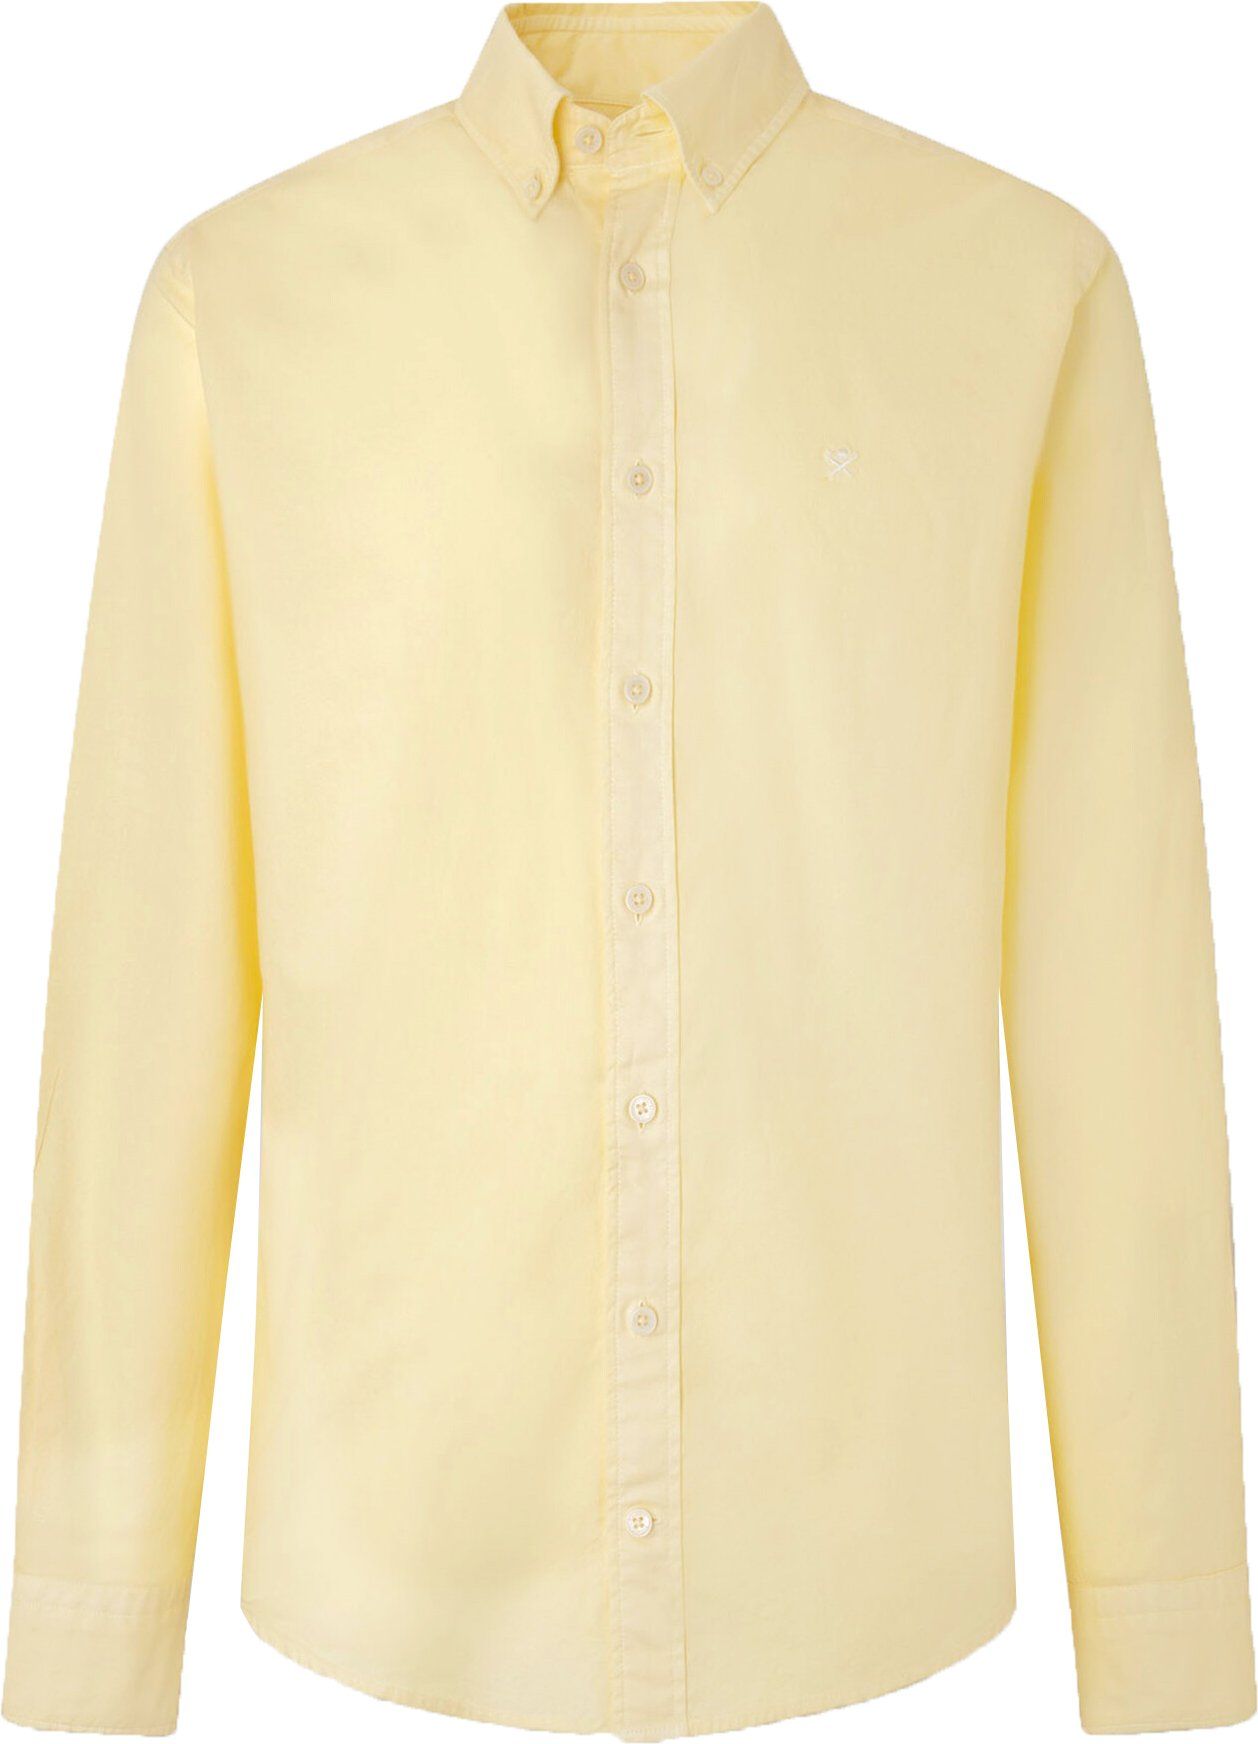 Hackett Shirt Garment Dyed Yellow size L